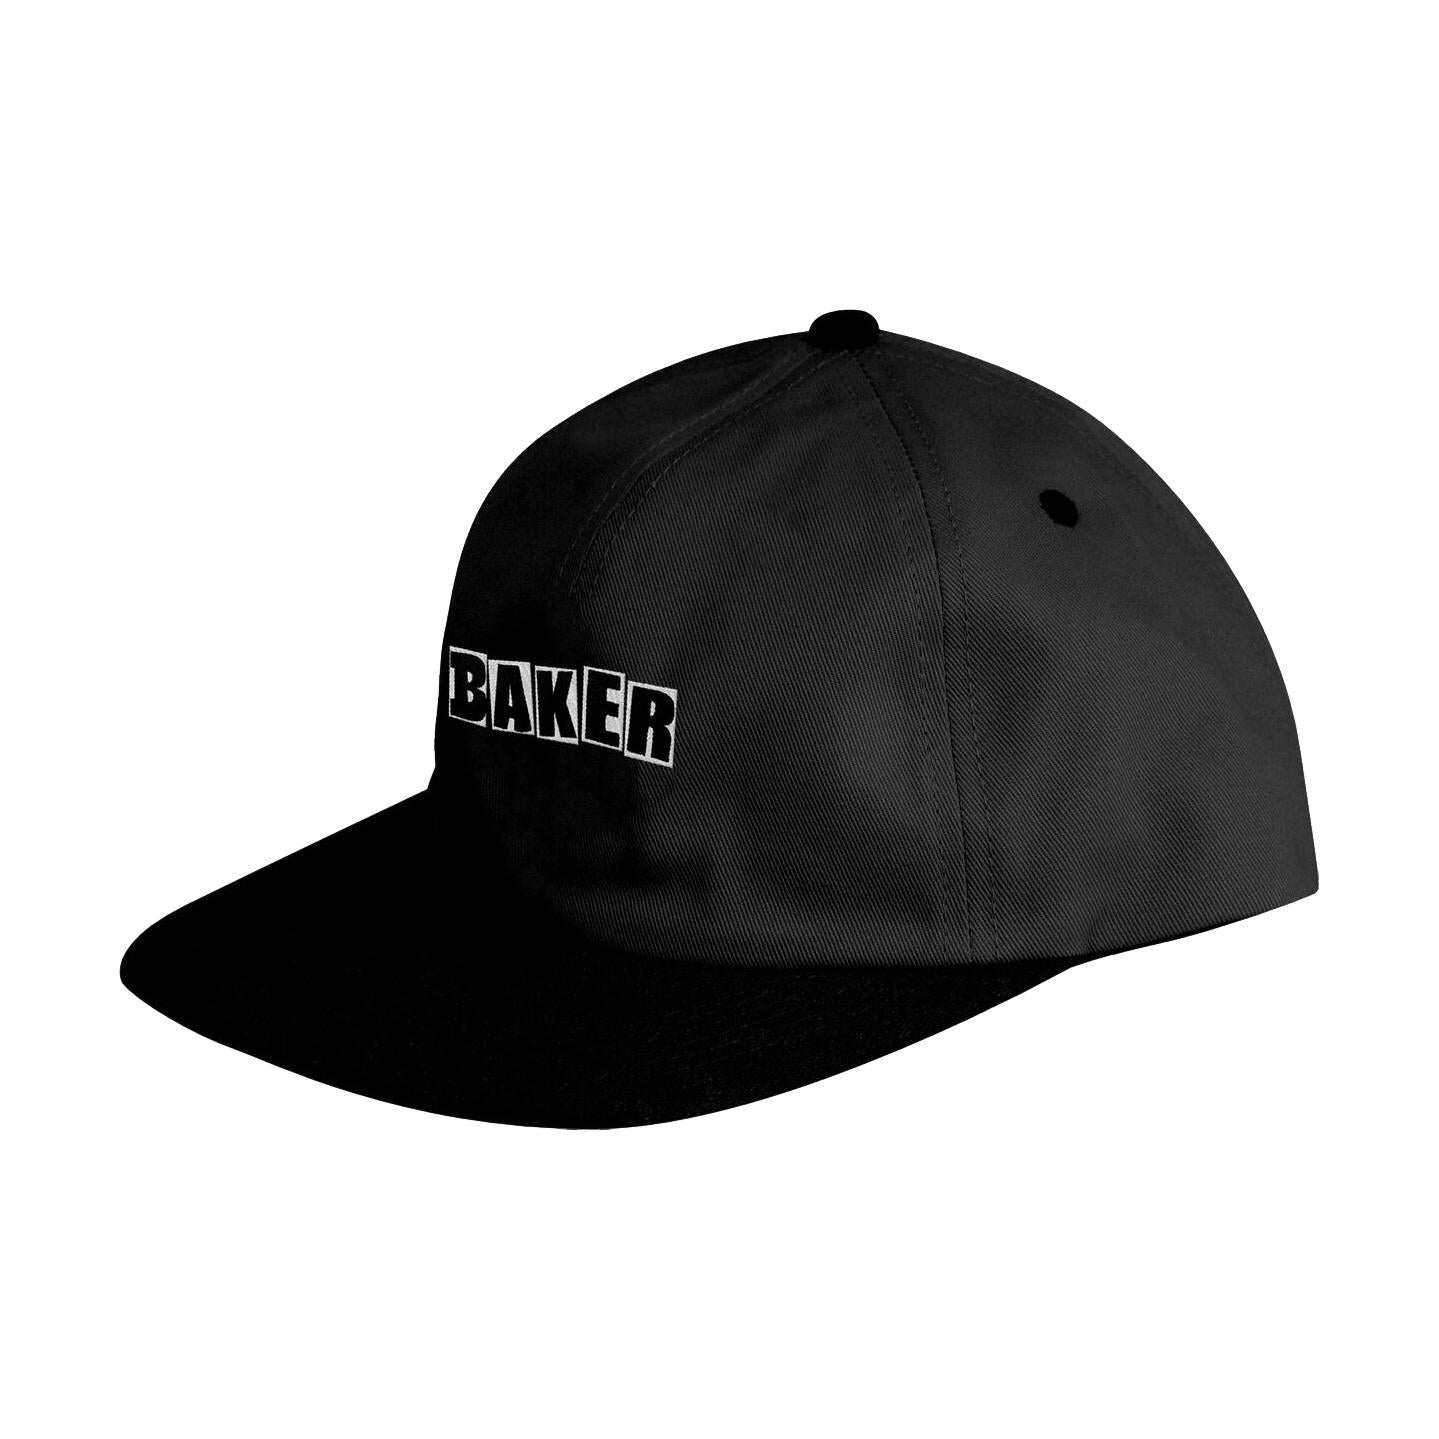 Baker Brand Logo Snapback Hat Blk/Wht - Venue Skateboards